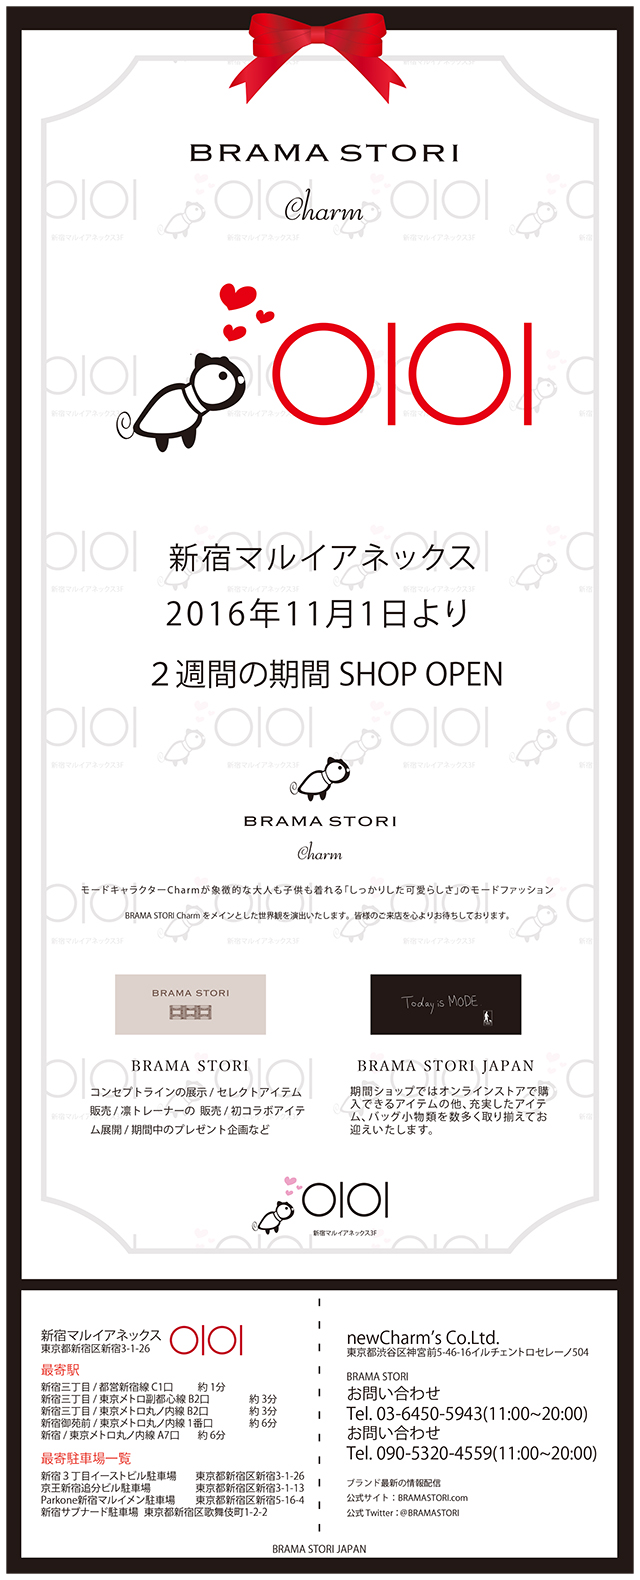 SHOP OPEN [新宿マルイアネックス店3FにBRAMA STORI Charm]期間限定ストア